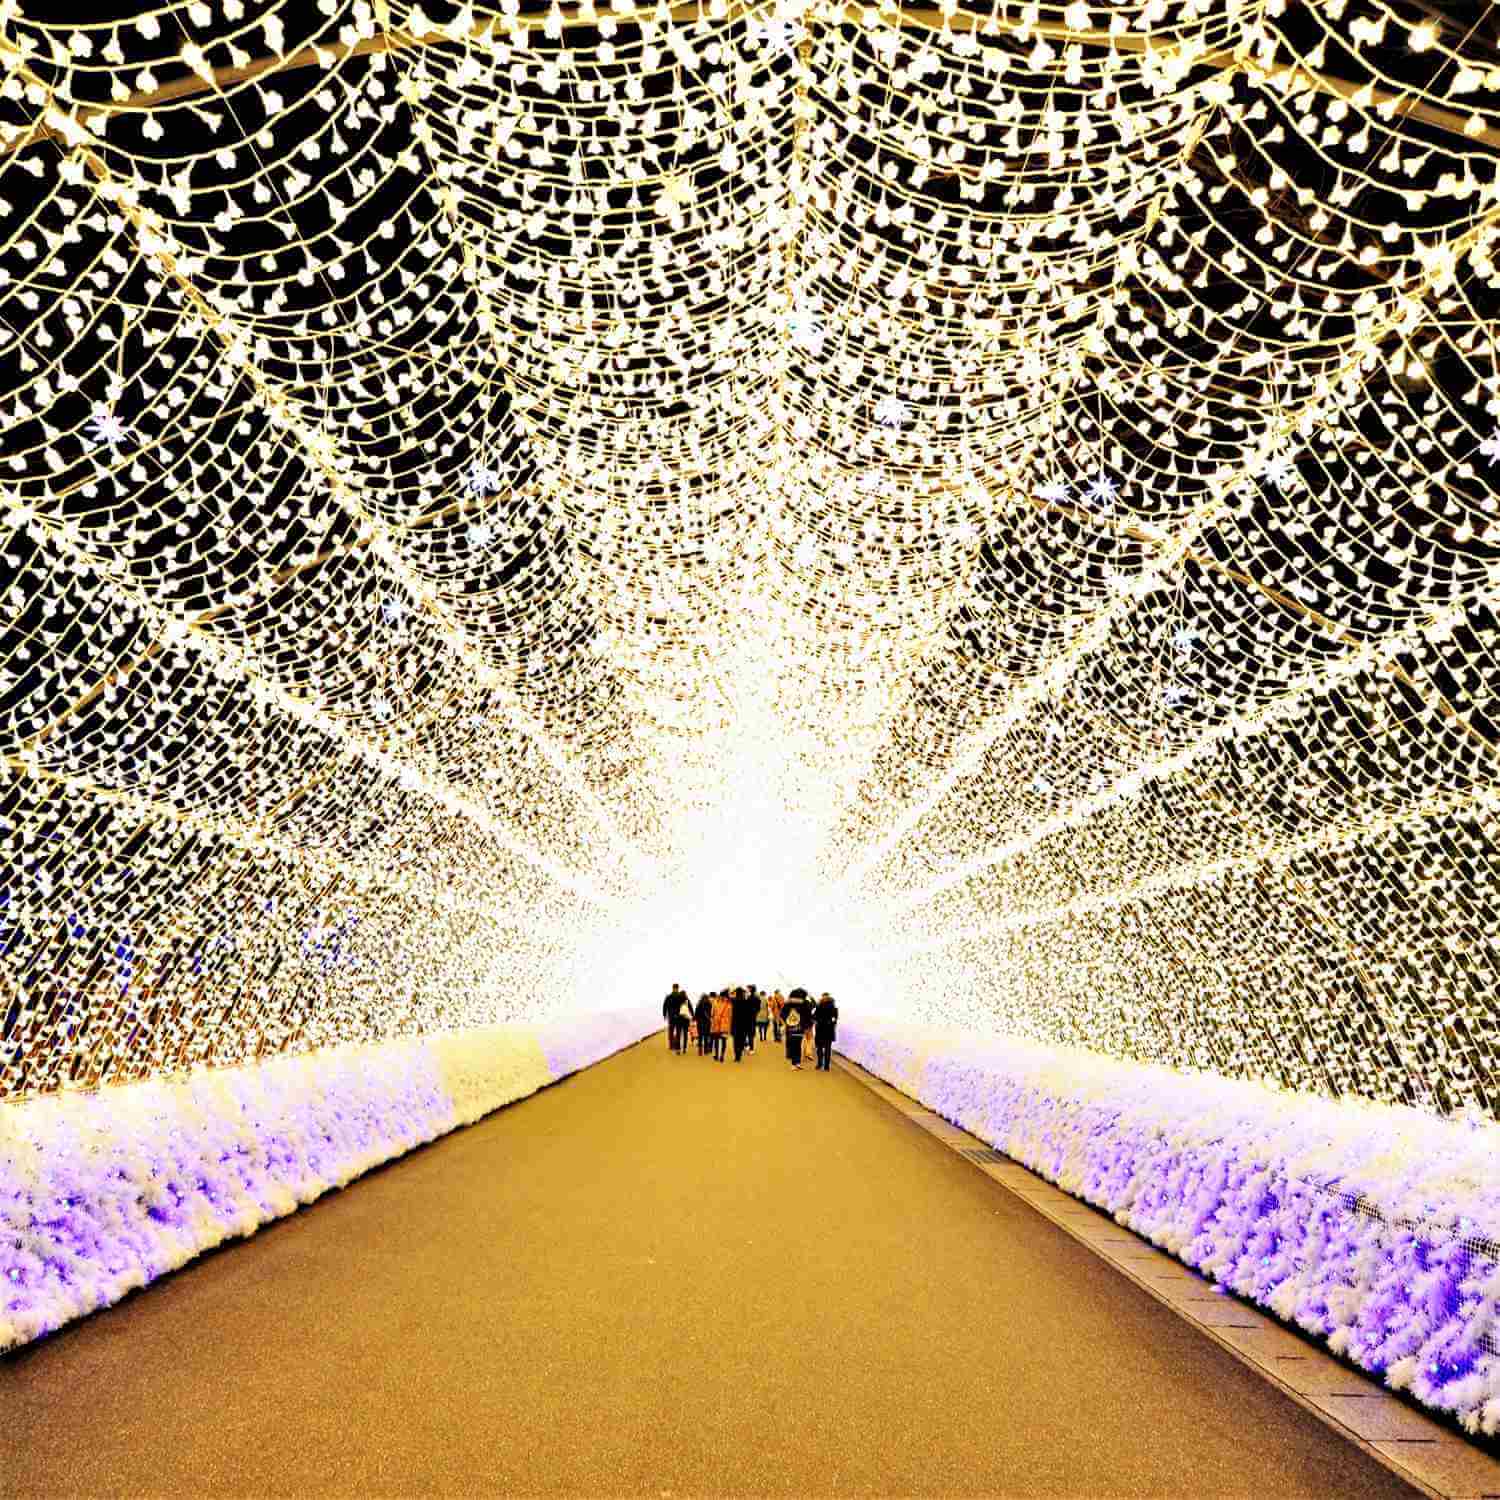 Nabana no Sato's illumination = Shutterstock 5